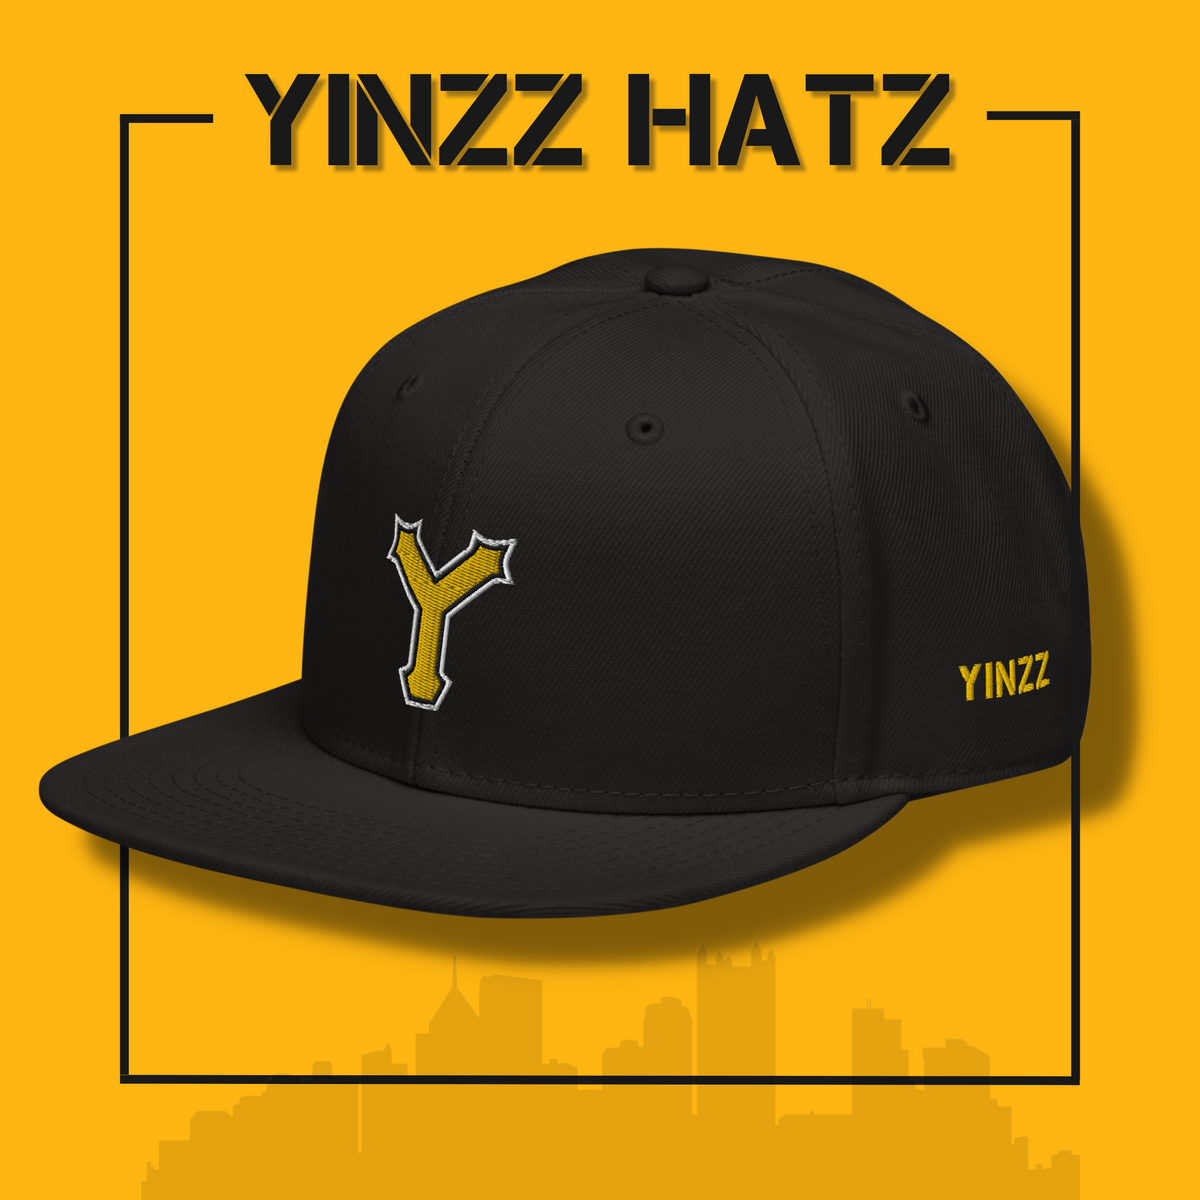 Yinzz Hatz - Rep Pittsburgh Sports!